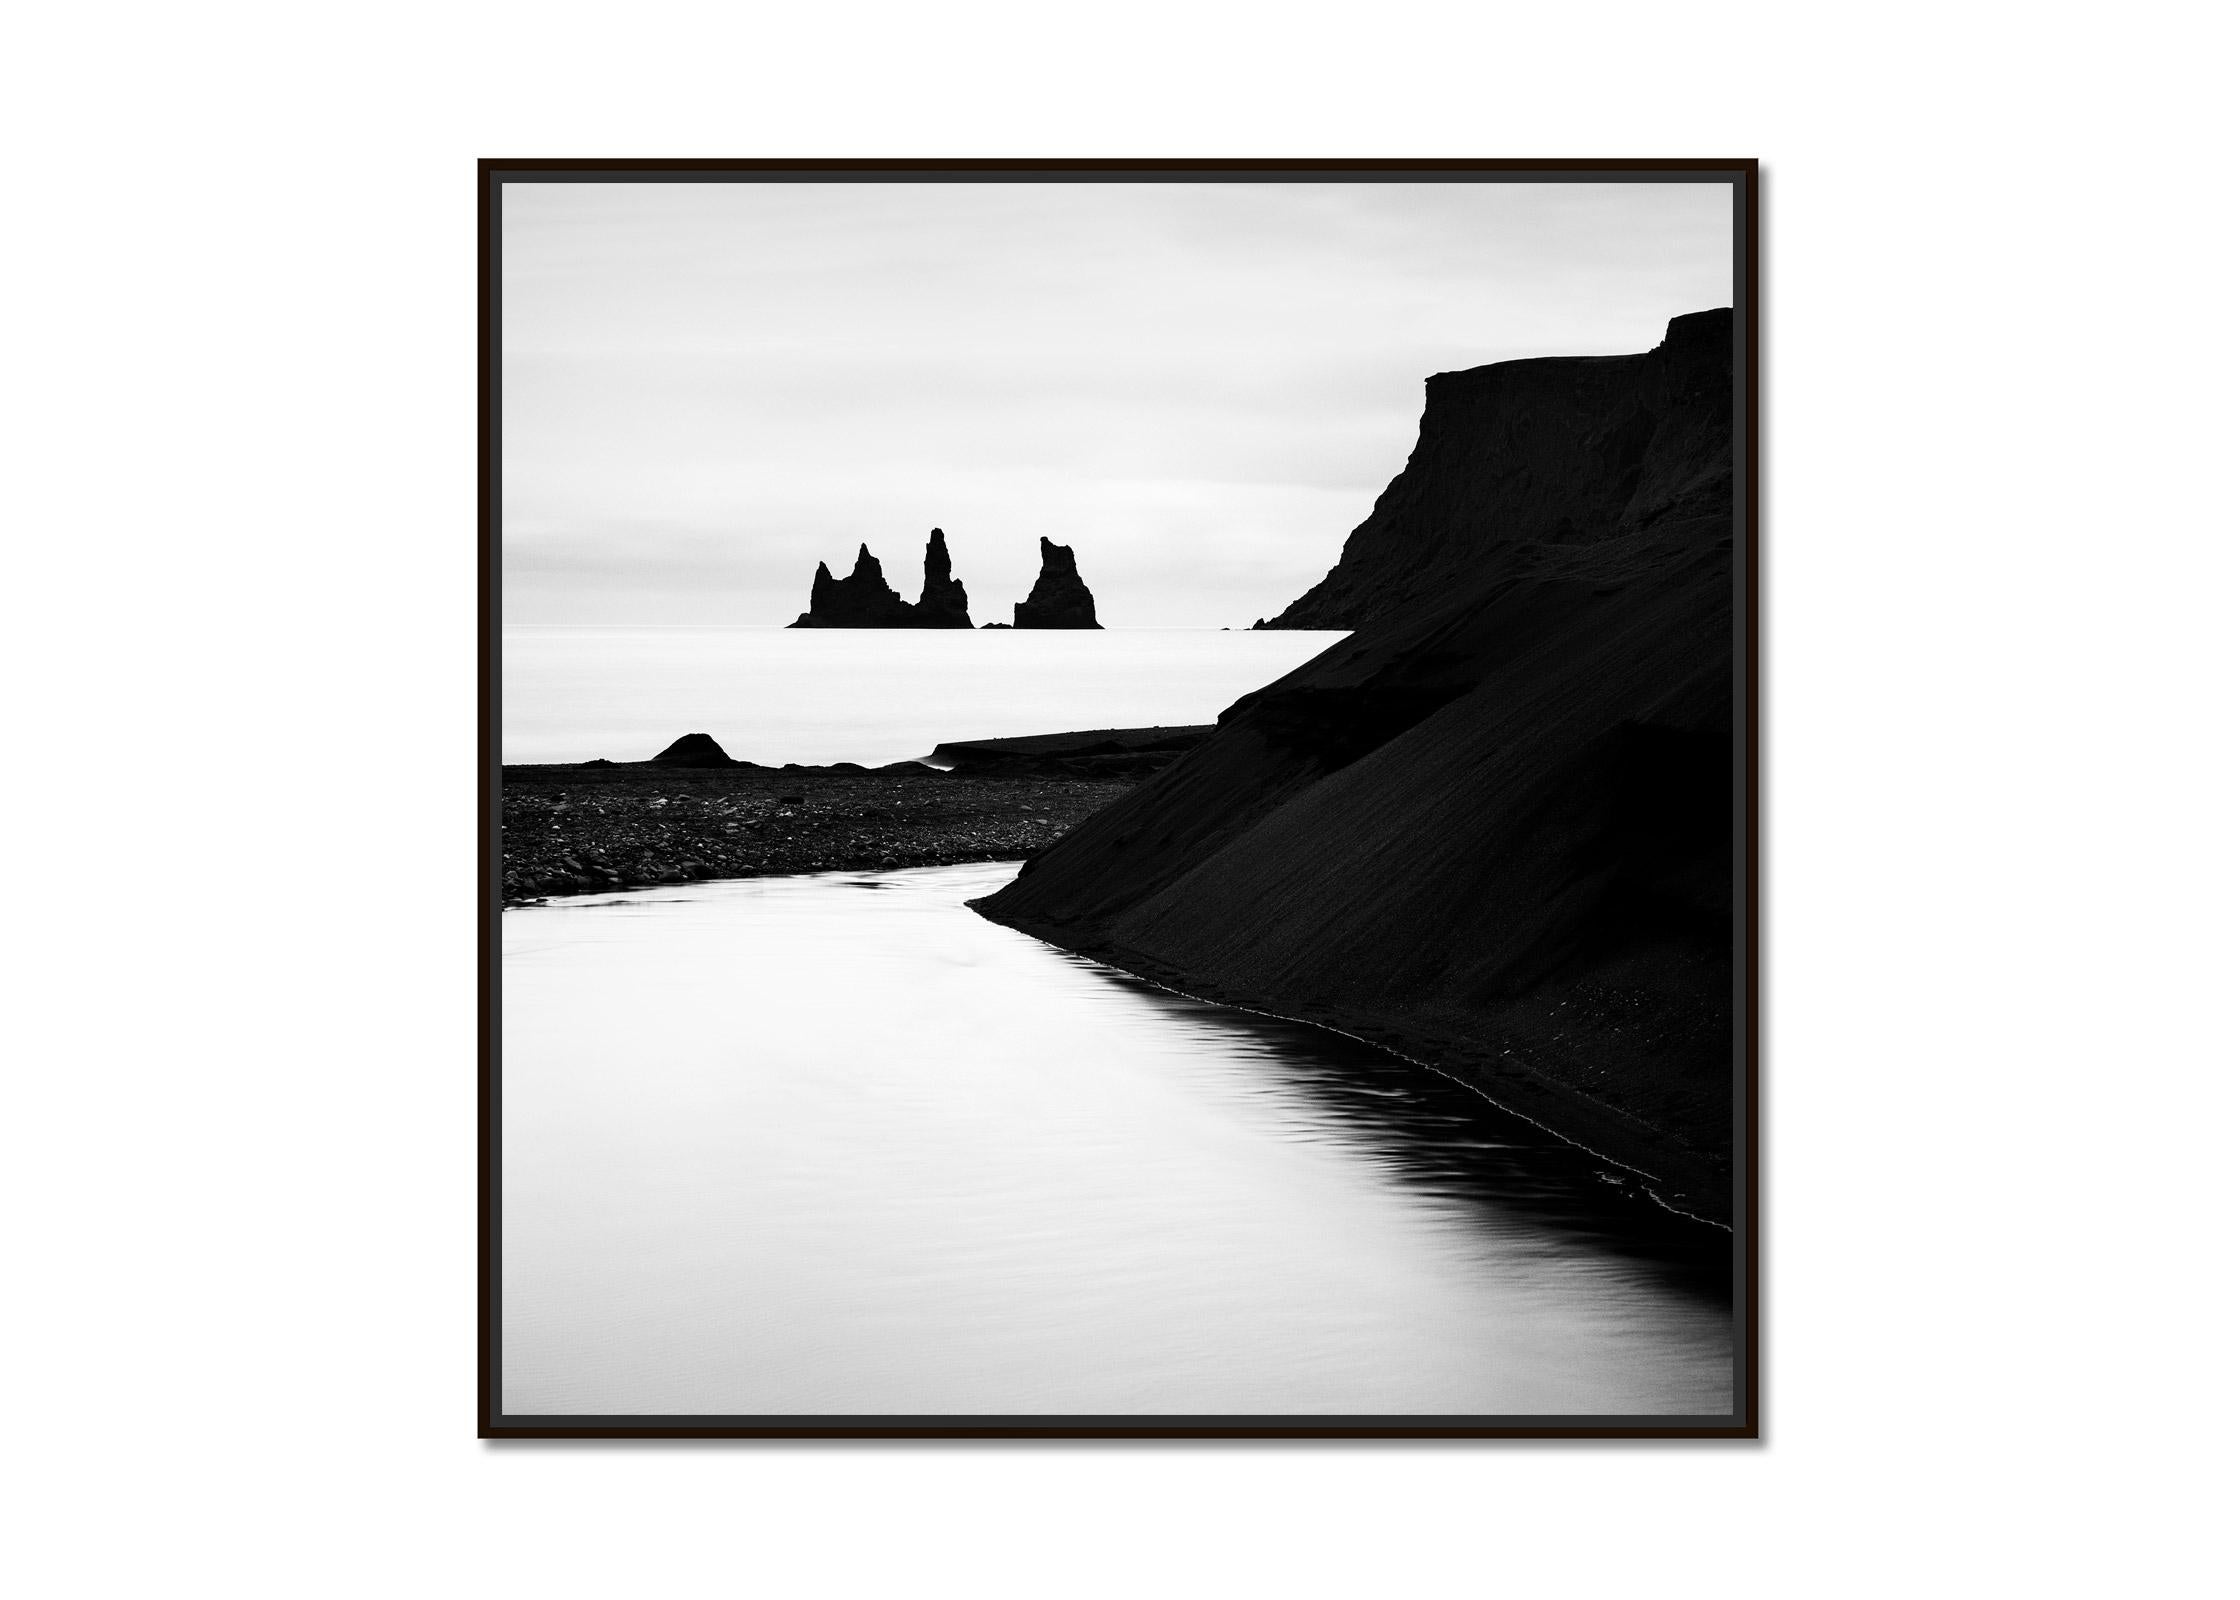 Reynisdrangar, black beach, Iceland, long exposure landscape art photography - Photograph by Gerald Berghammer